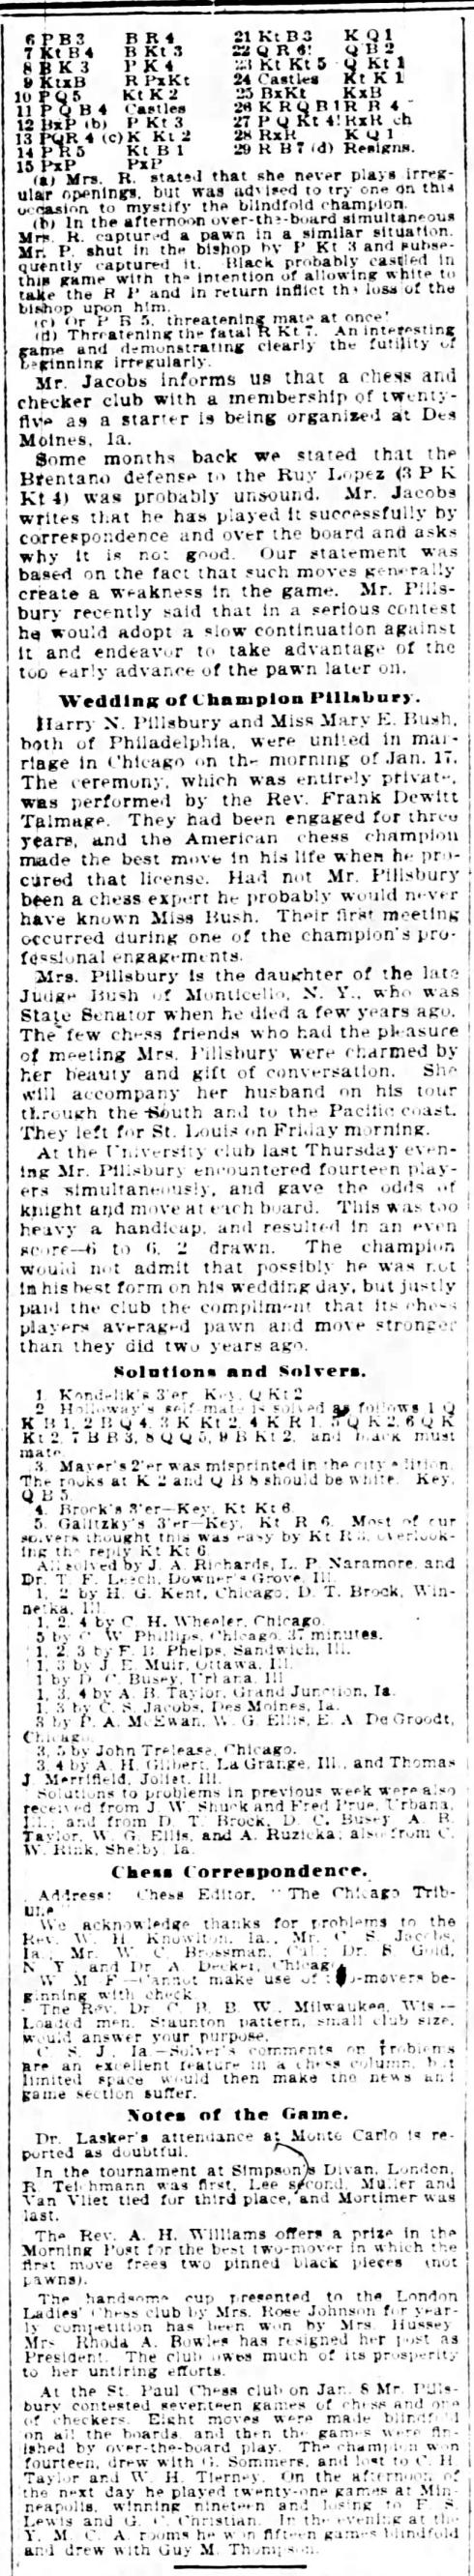 1901.01.20-02 Chicago Tribune.jpg